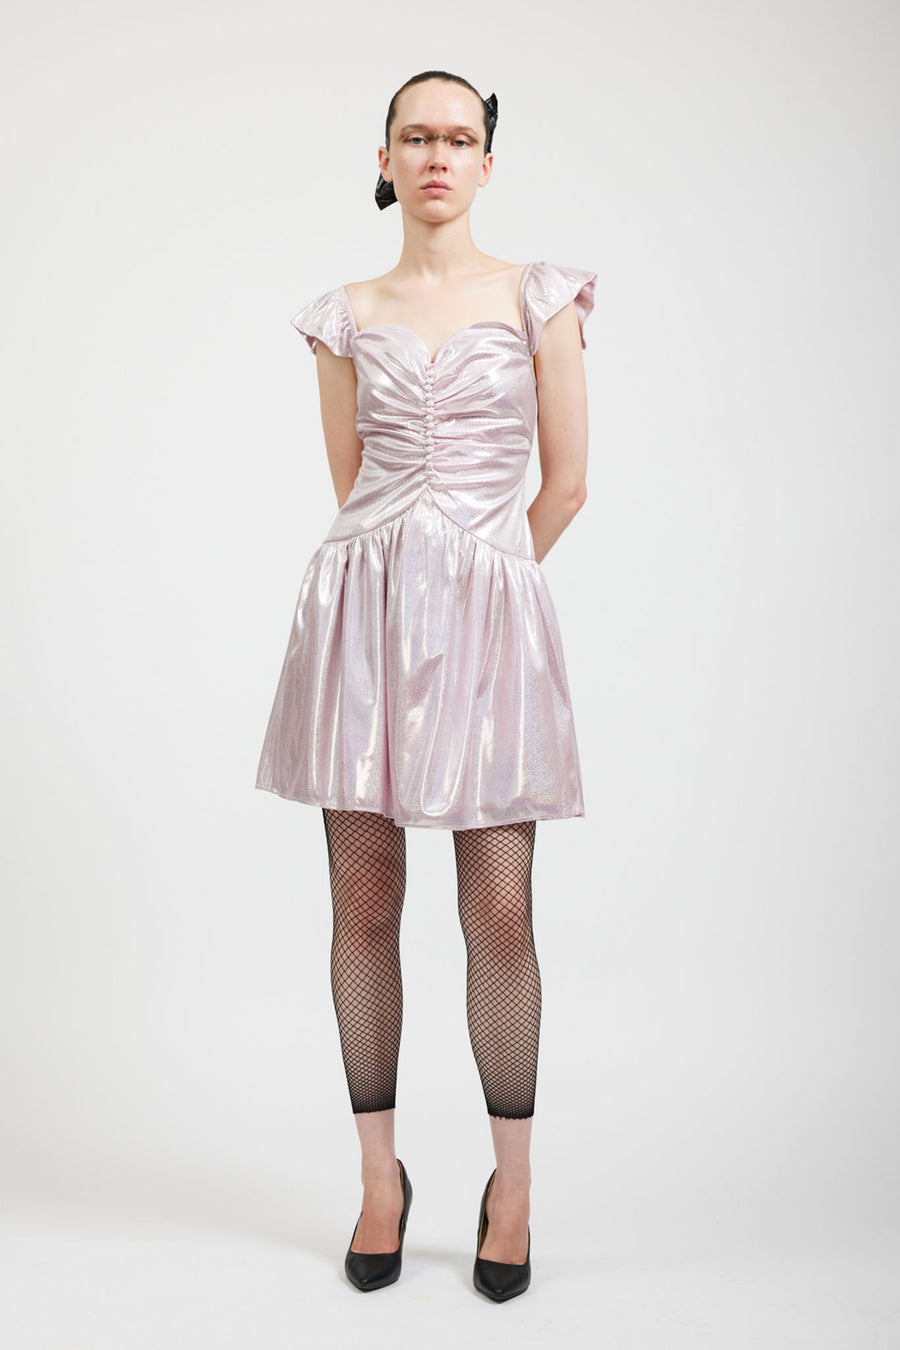 BATSHEVA - Wendy Dress in Pink Holographic